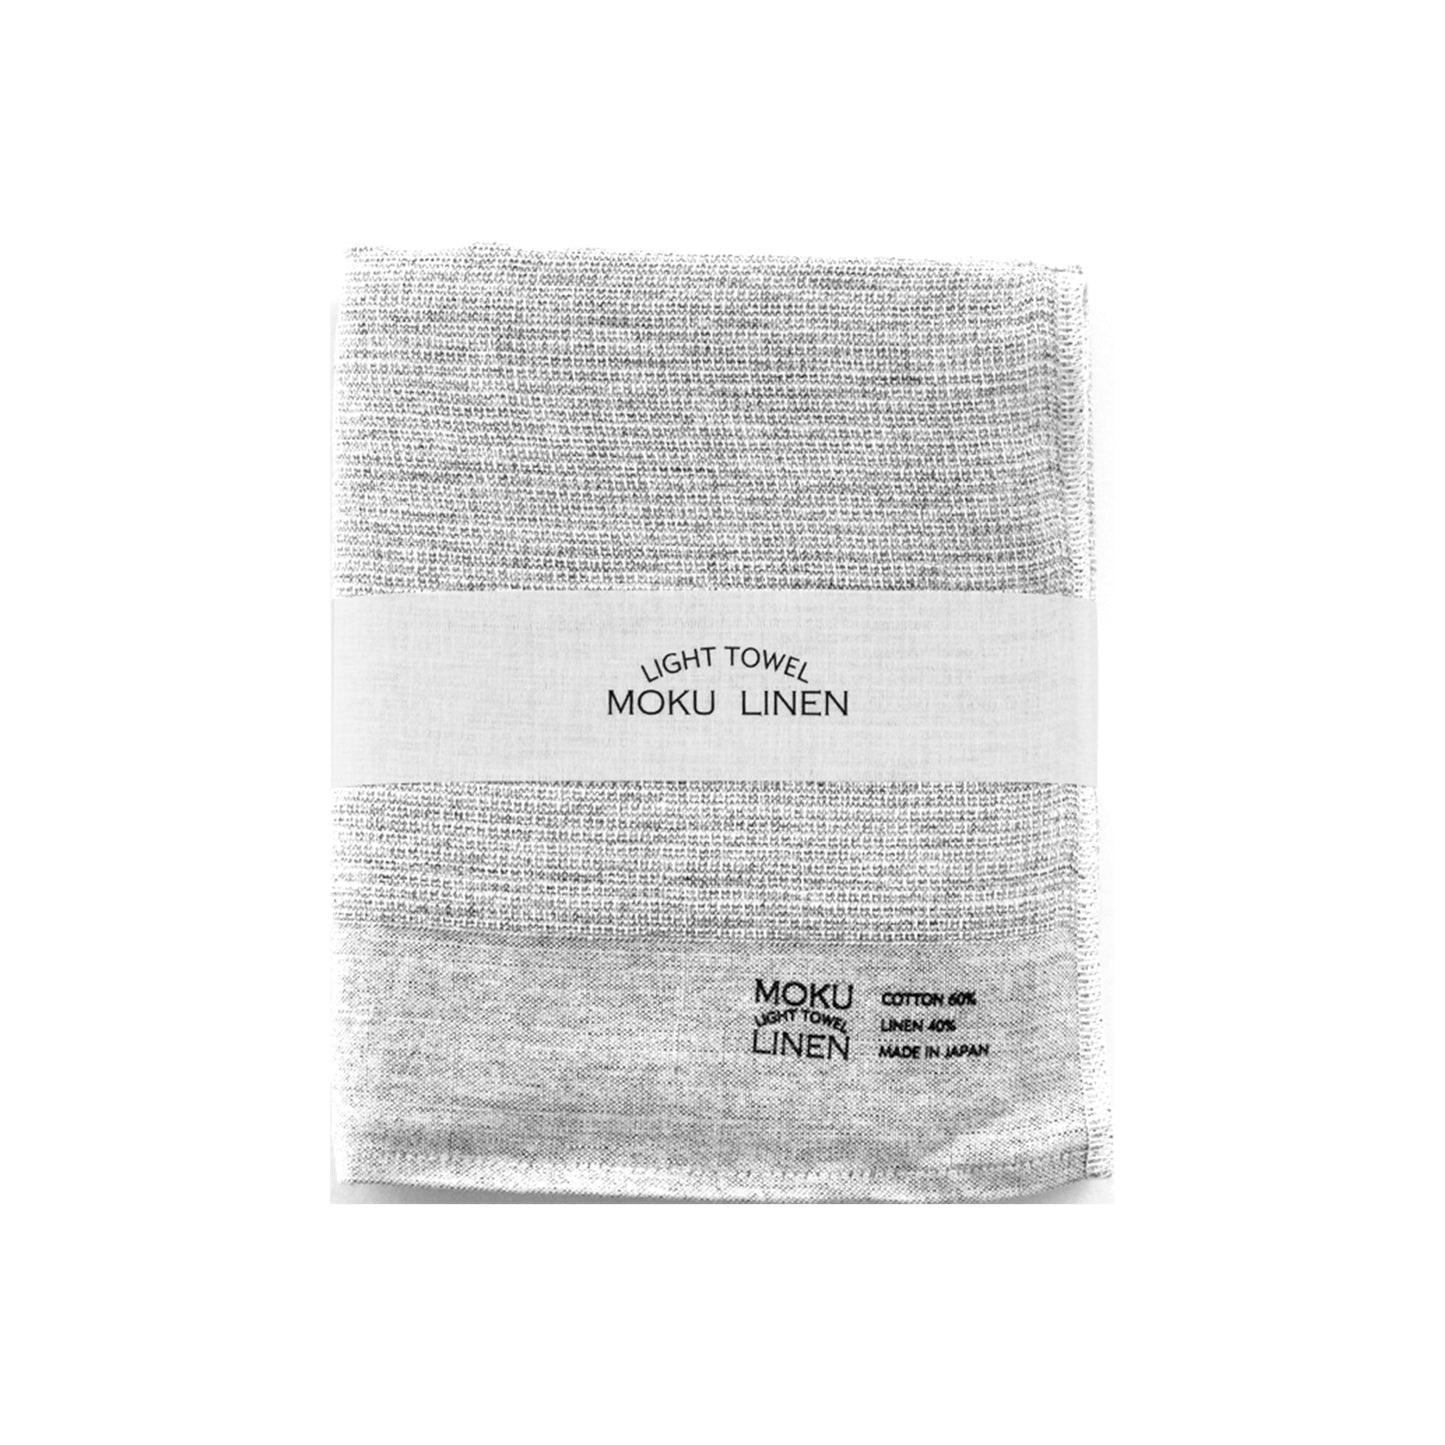 Moku Linen Towel M